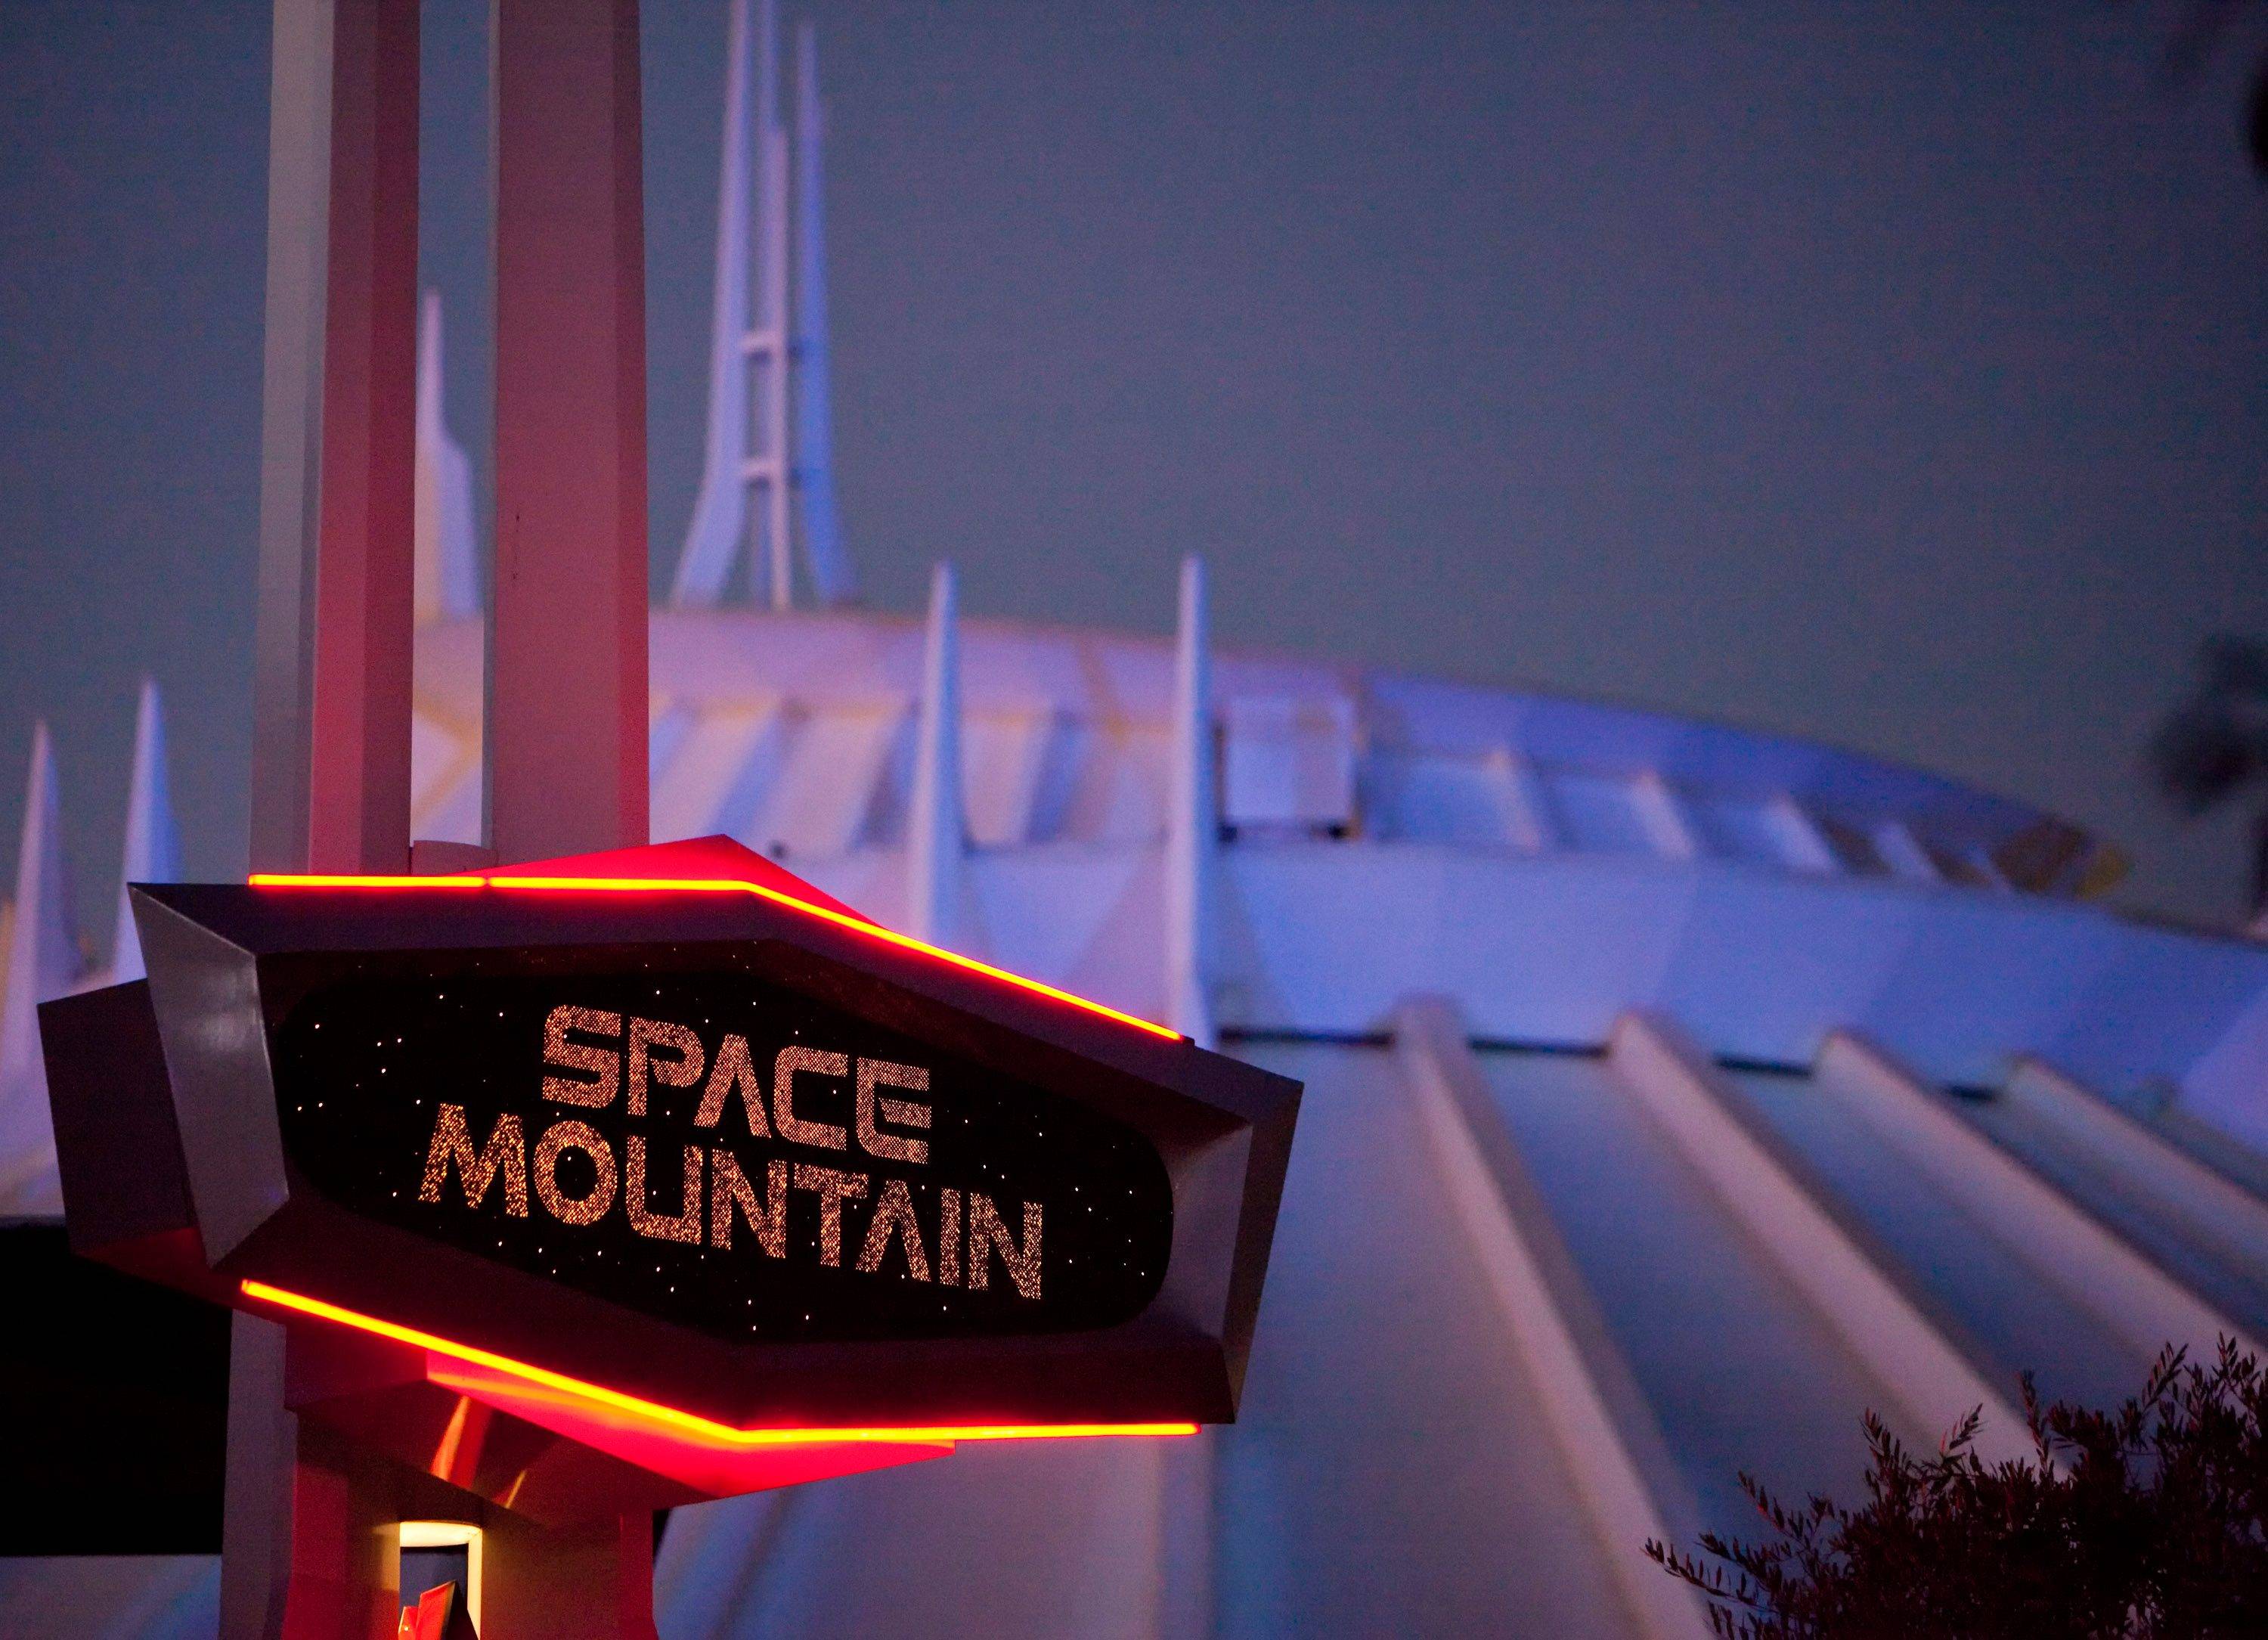 Disneyland's Space Mountain to close for a major refurbishment